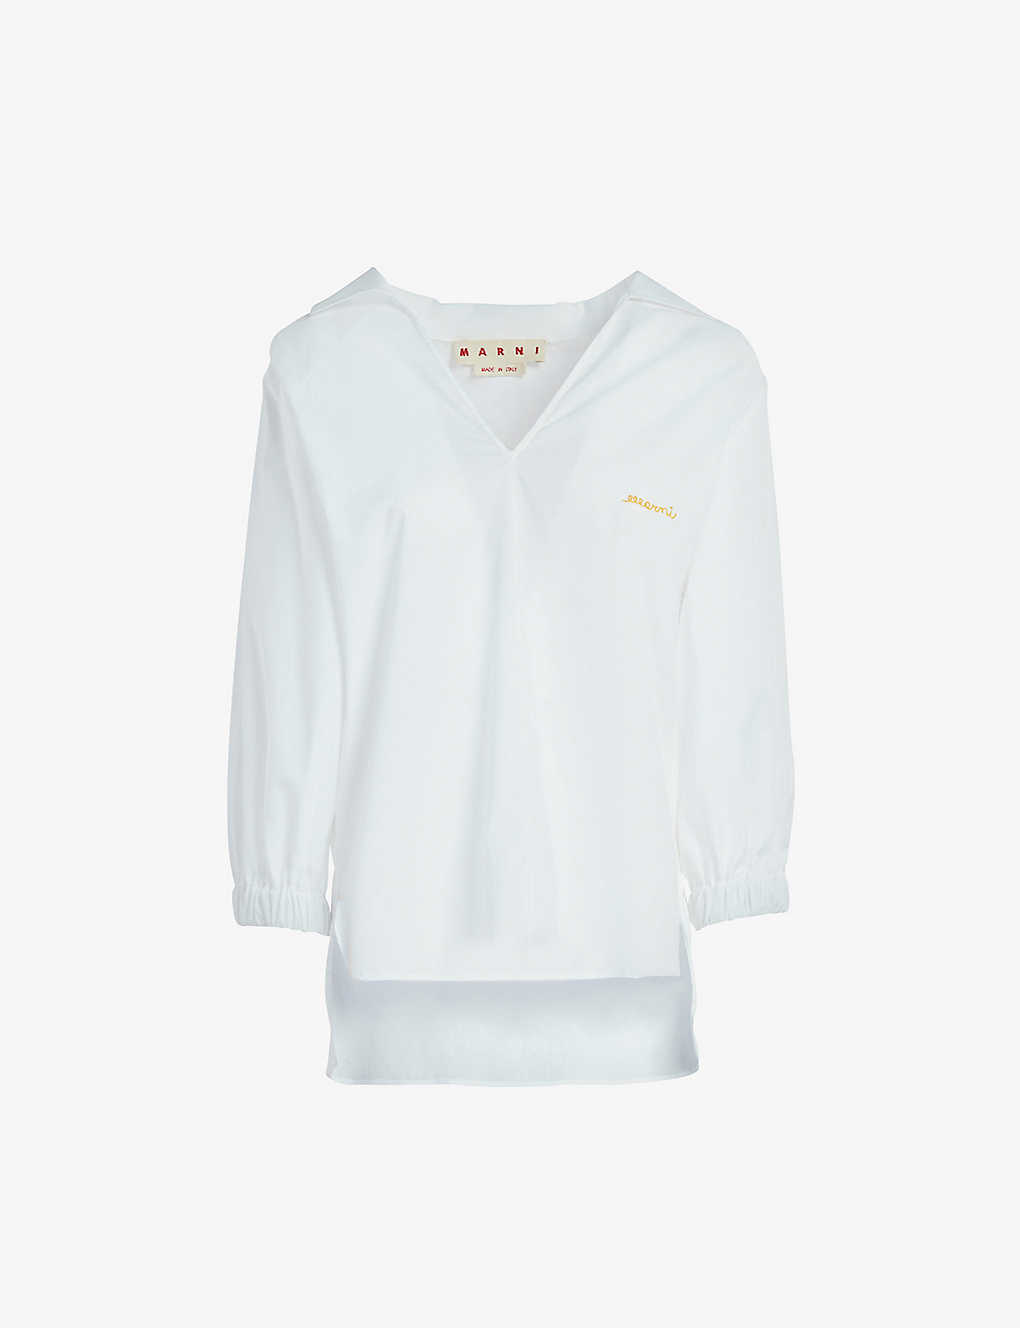 Marni Logo Cotton Shirt In Lily White